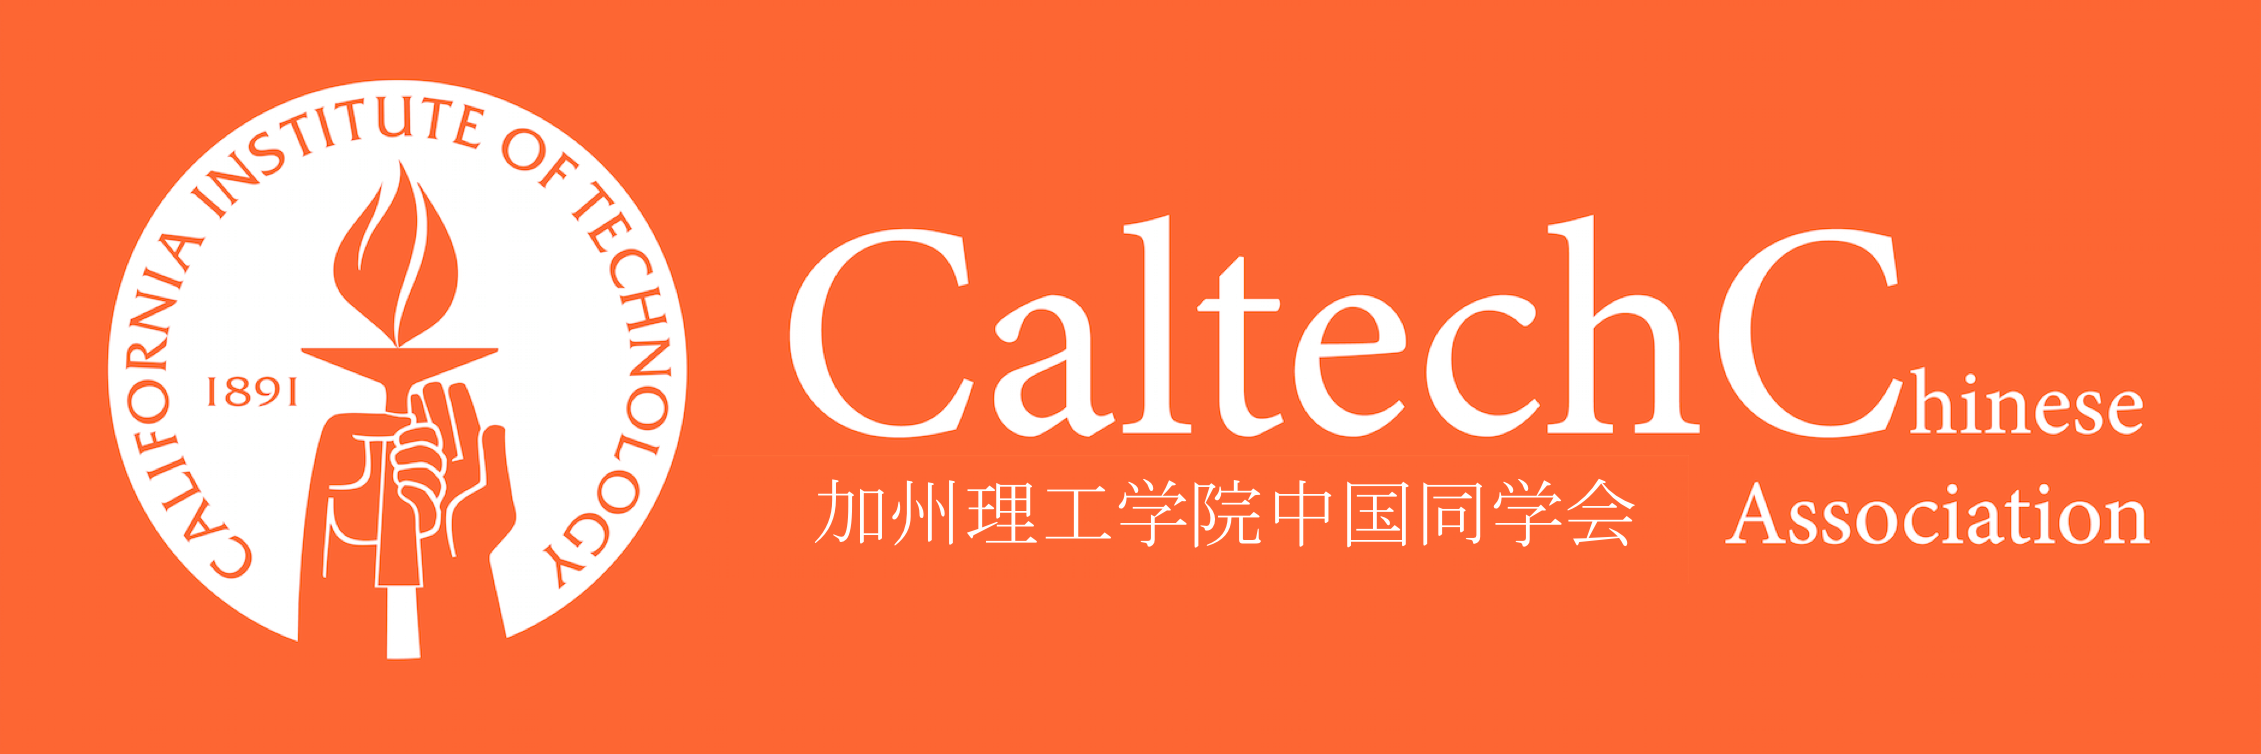 CaltechC